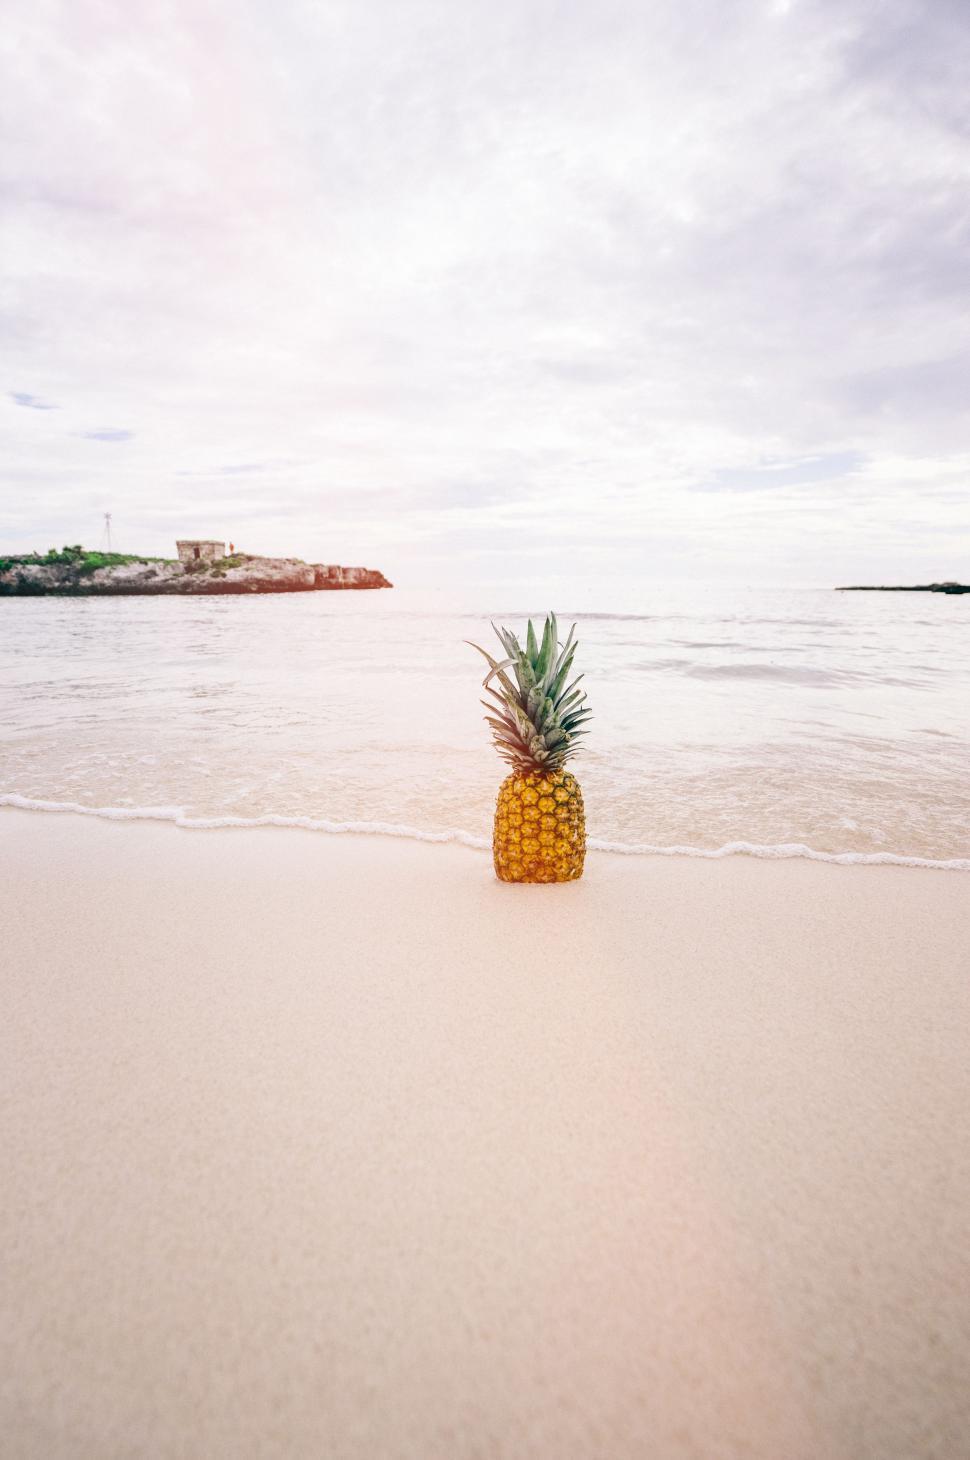 Free Image of Pineapple on Sandy Beach 